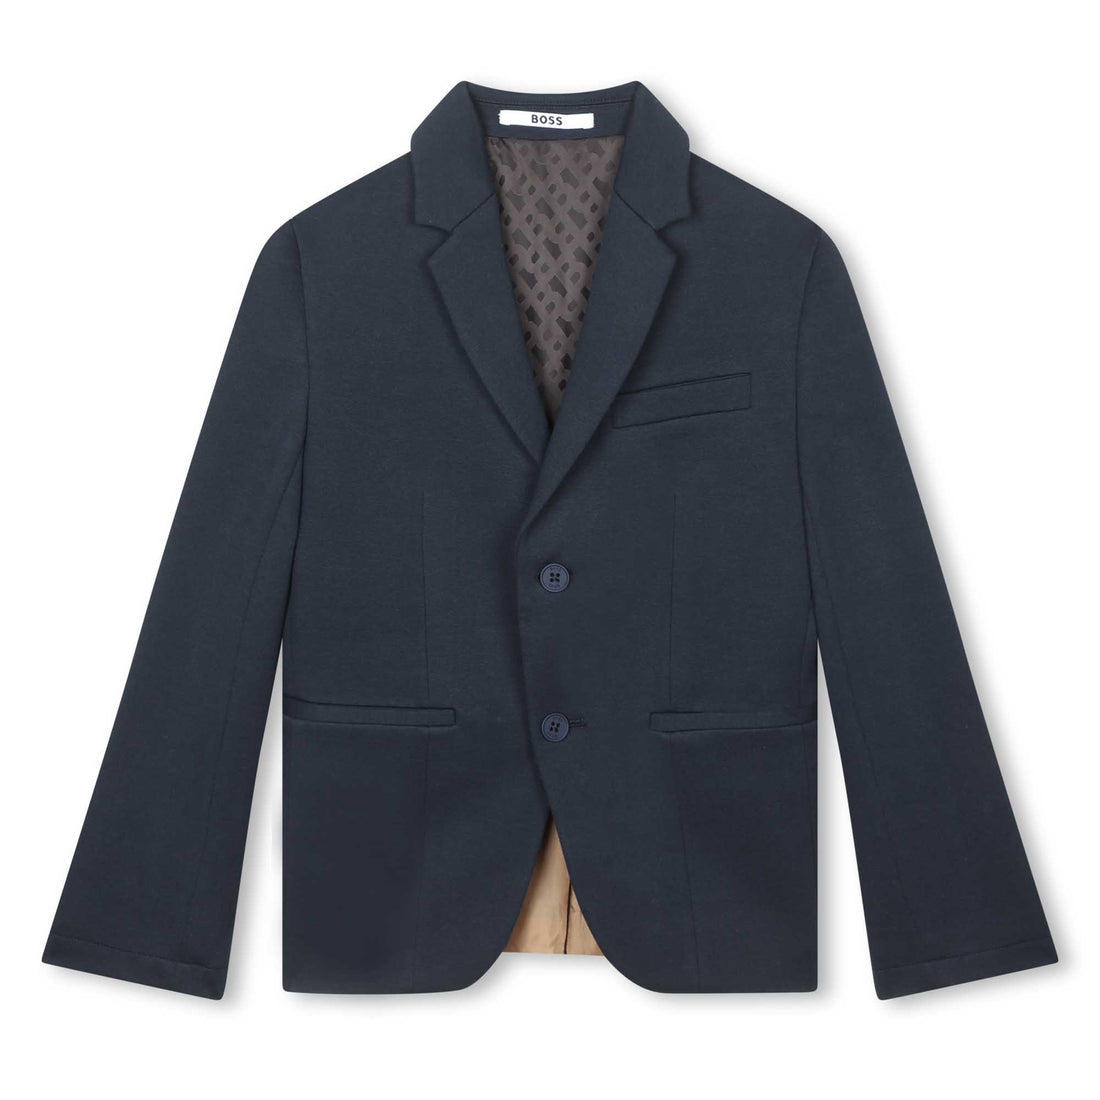 Hugo Boss Suit Jacket Style: J26522